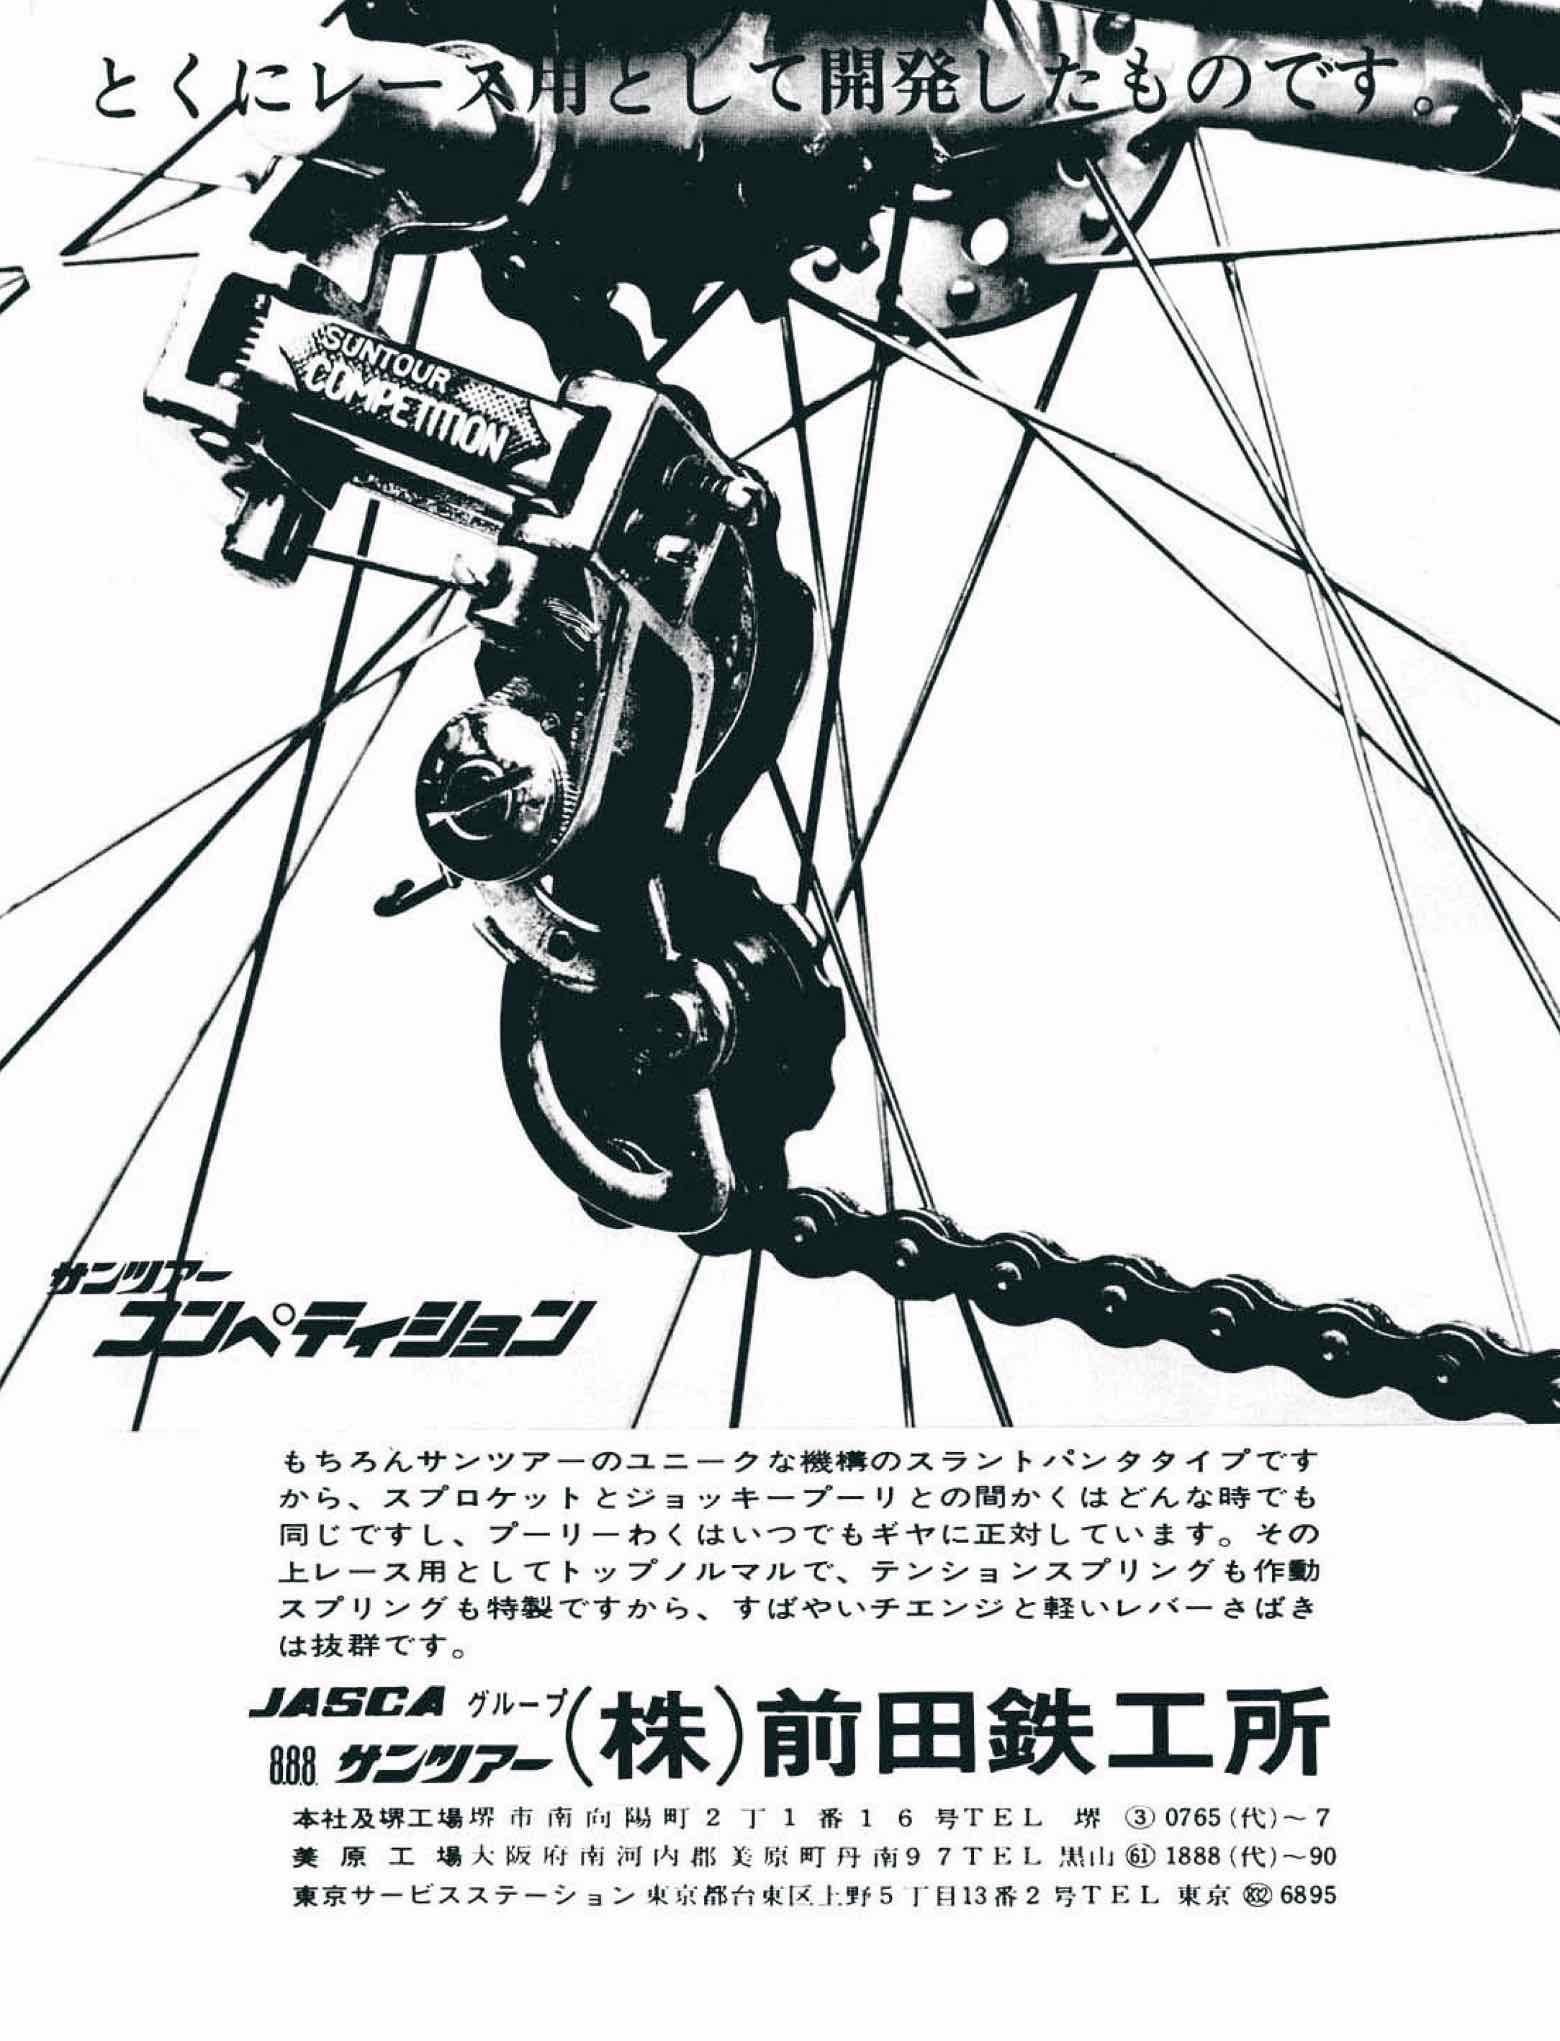 New Cycling September 1967 - SunTour advert main image